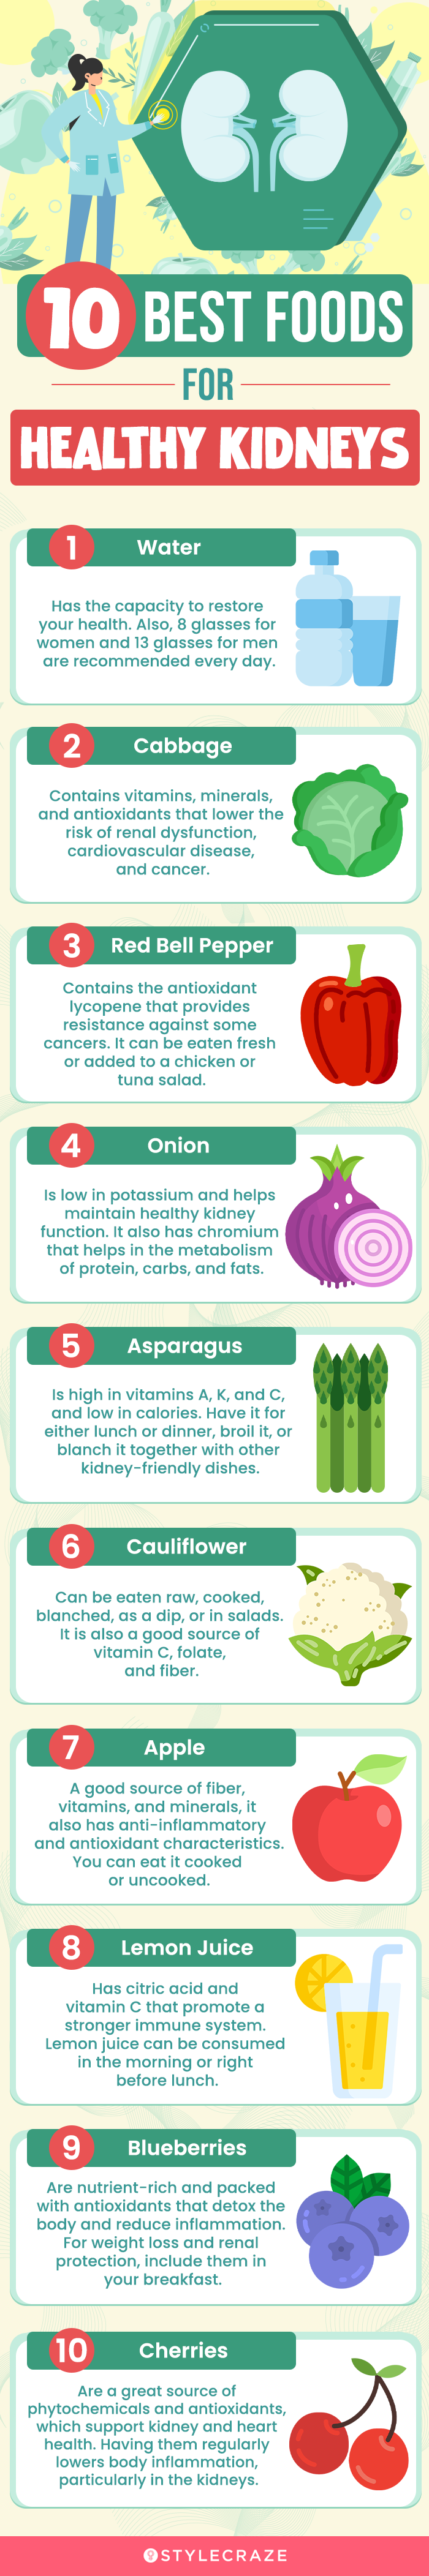 10 best foods for healthy kidneys (infographic)